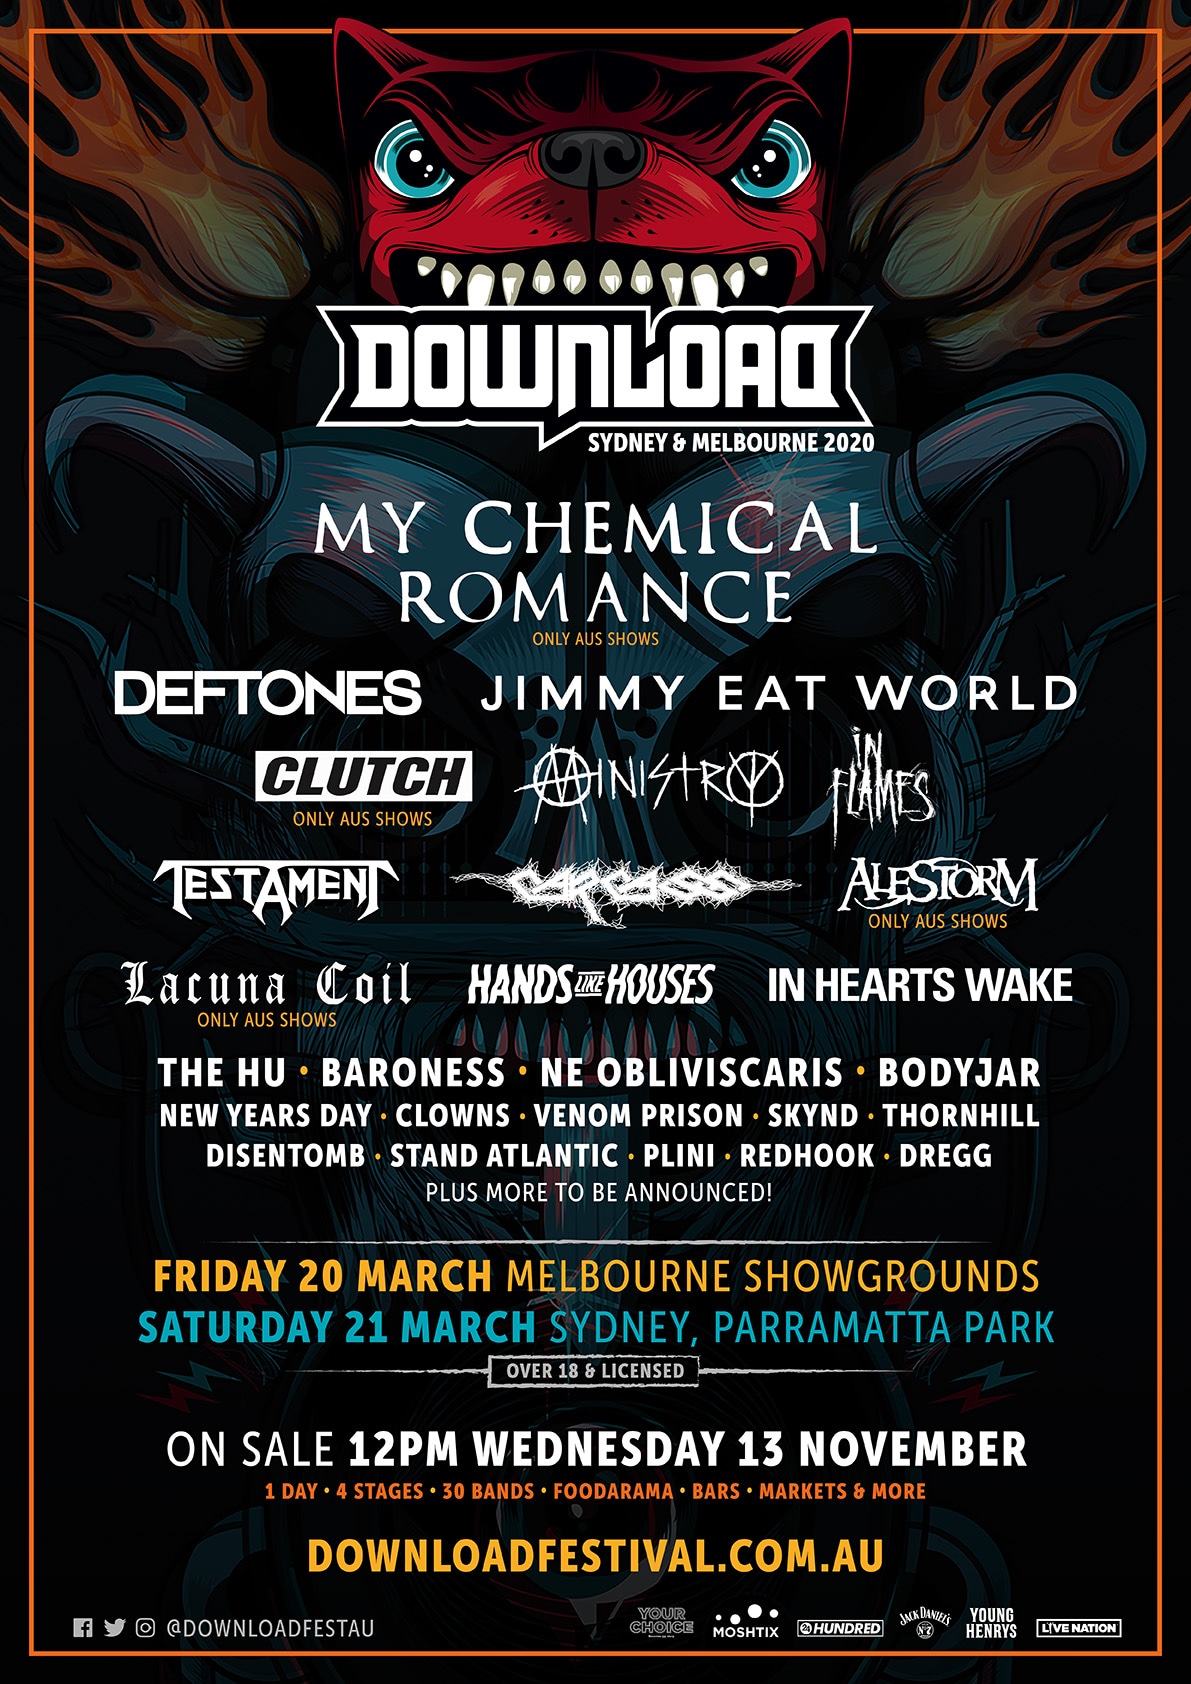 Download Festival Sydney + Melbourne Announces 2020 Lineup Featuring My